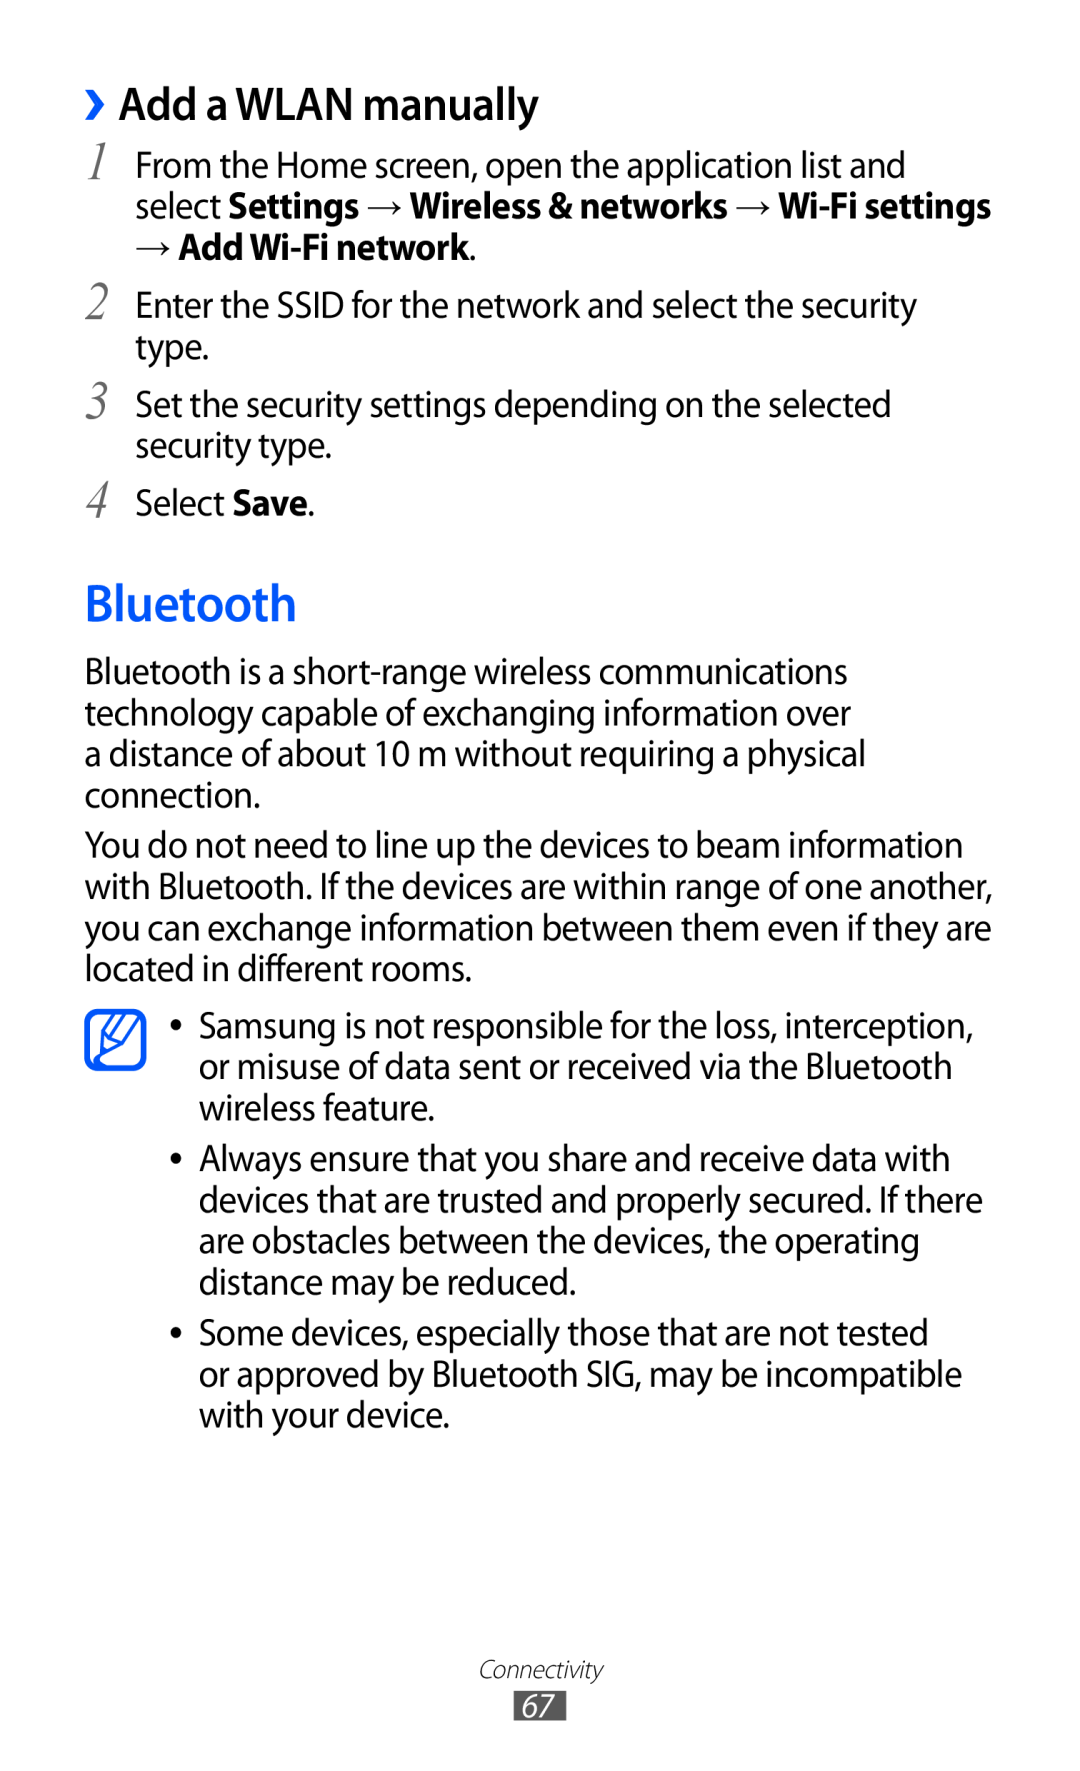 Samsung GT-P7510 user manual Bluetooth, ››Add a WLAN manually, → Add Wi-Fi network 